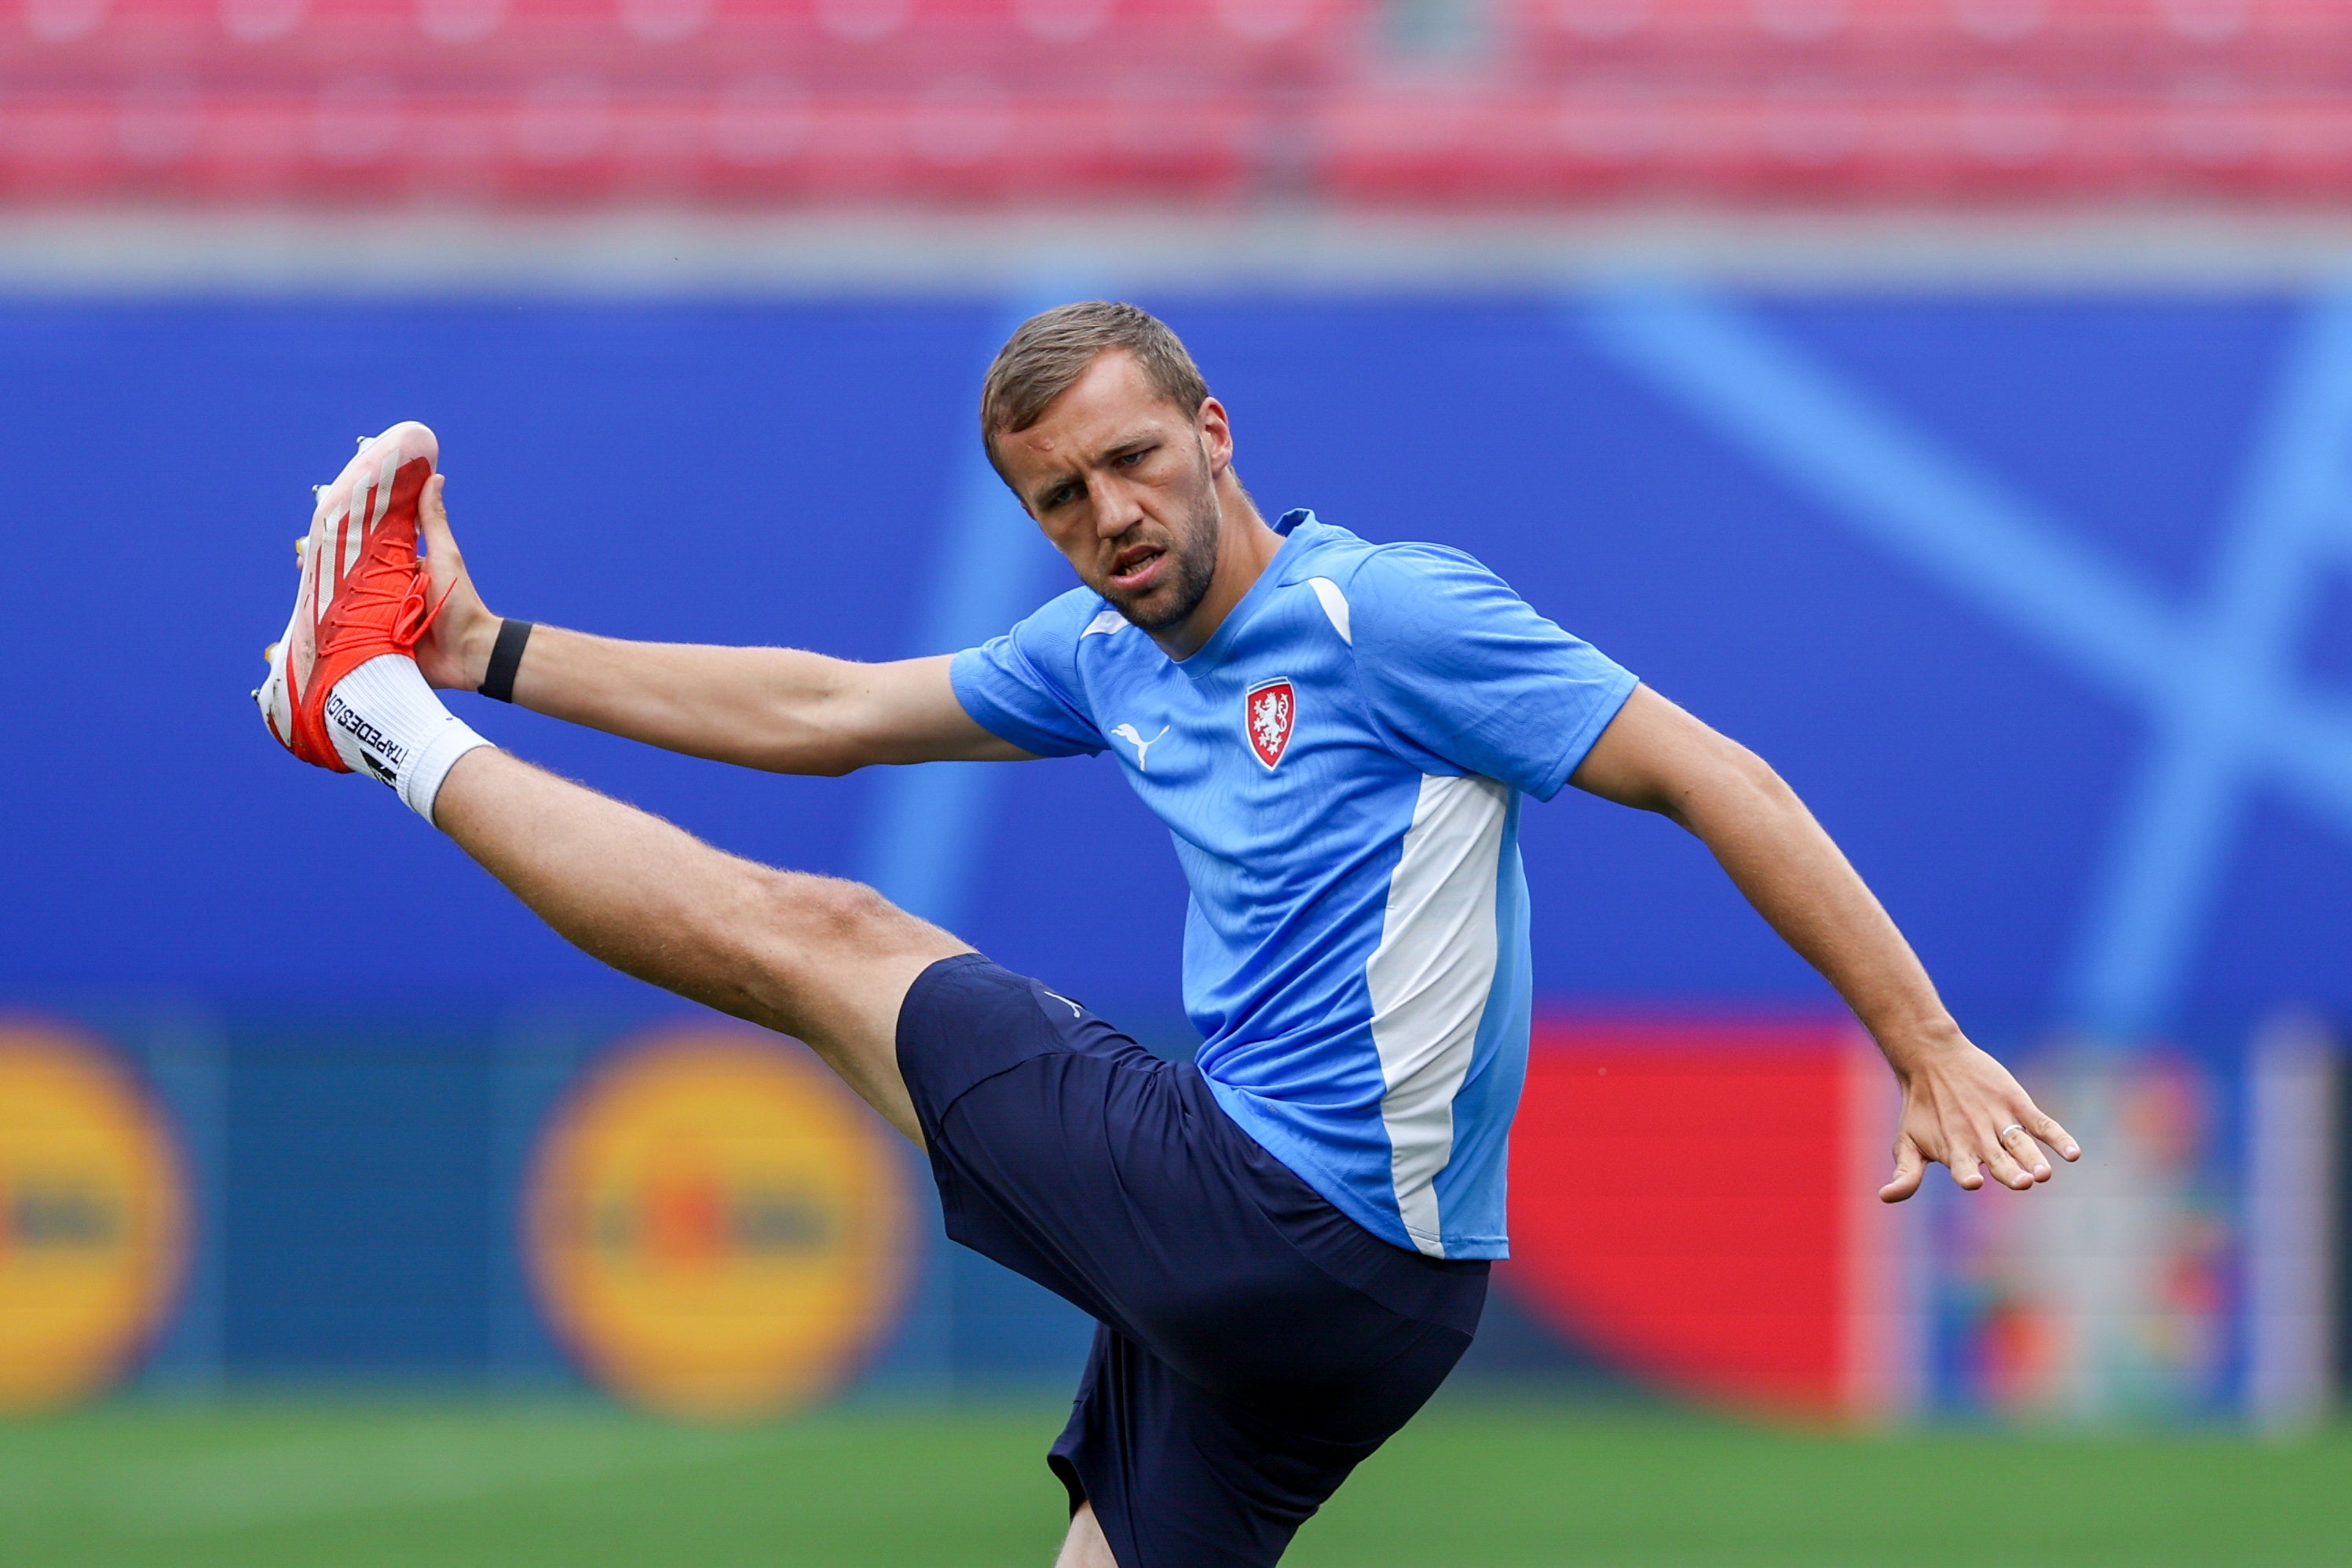 Czechia’s star midfielder Tomas Soucek stretches in training